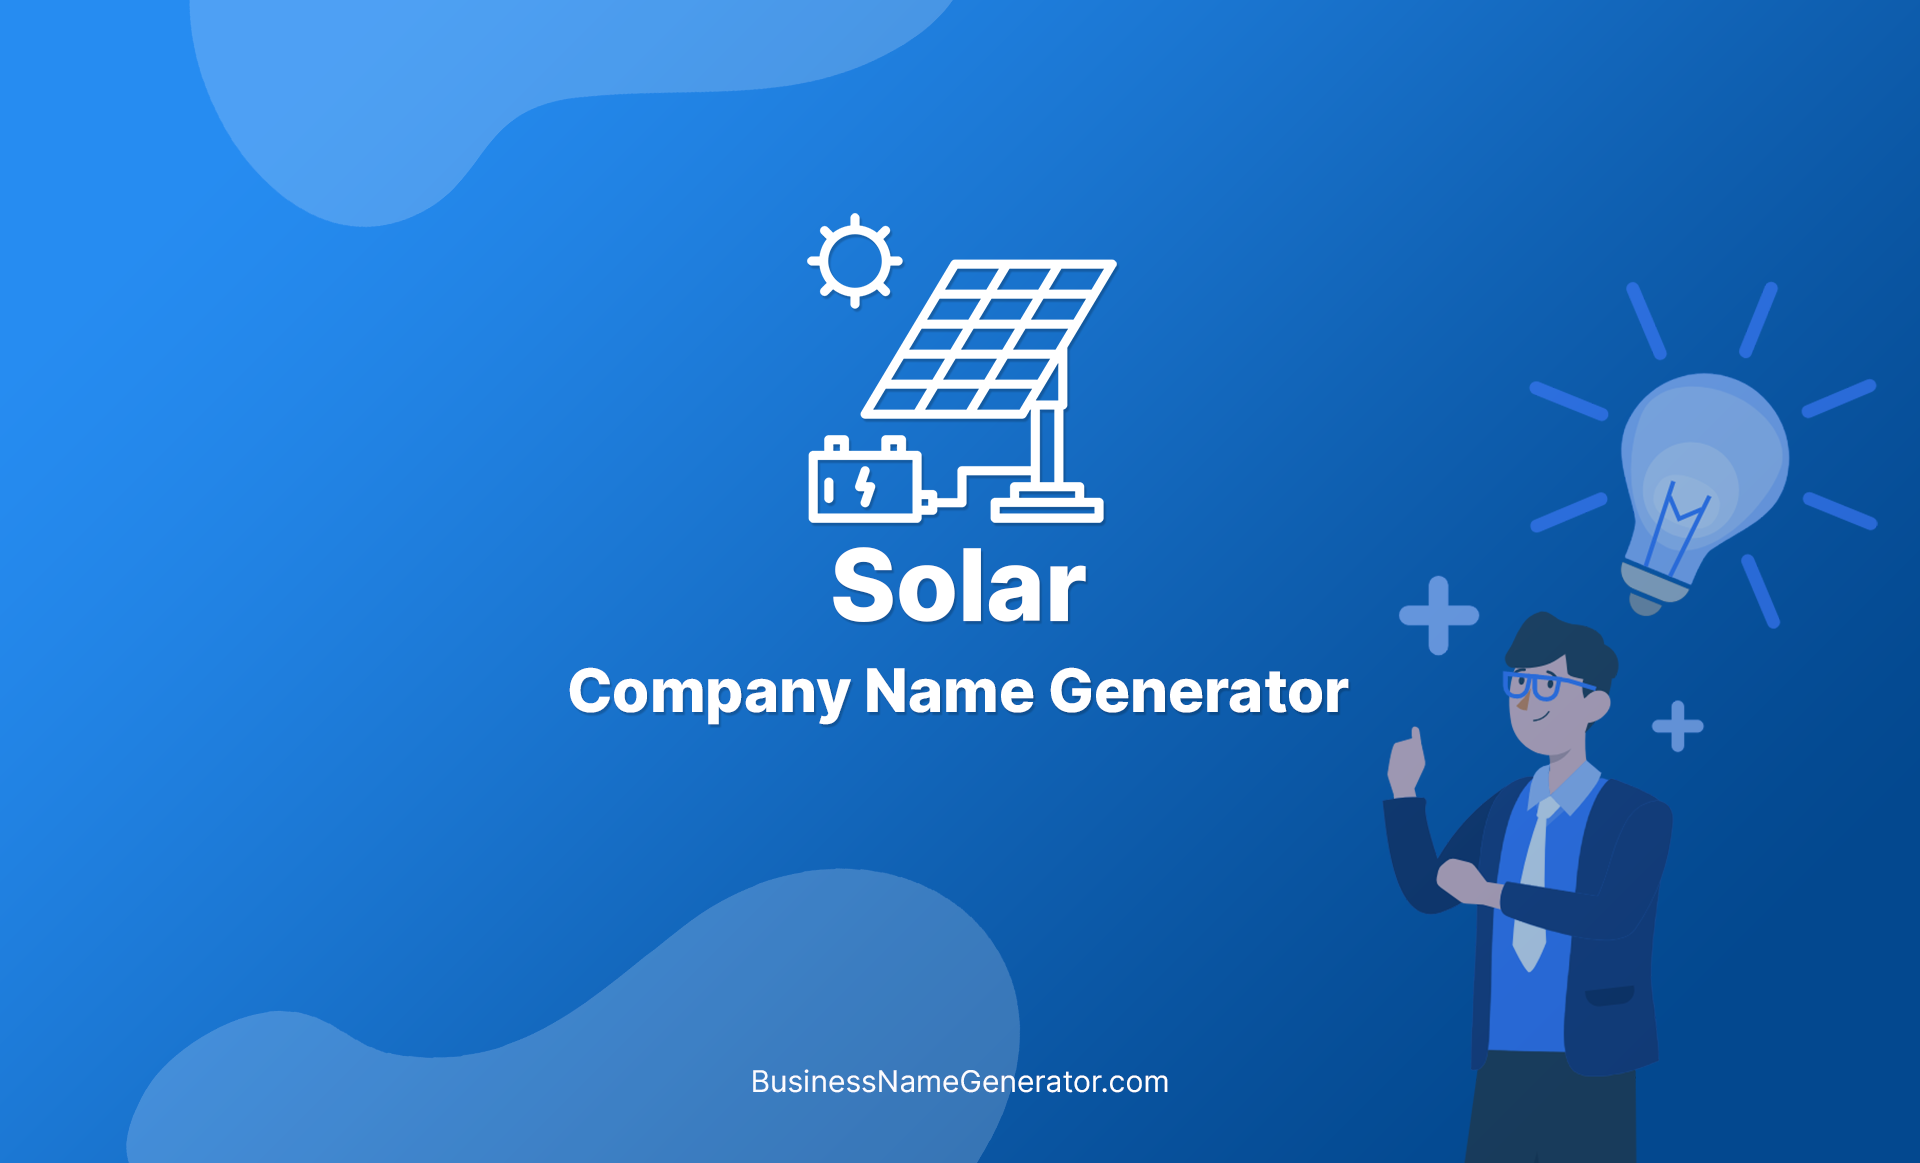 Solar Company Name Generator